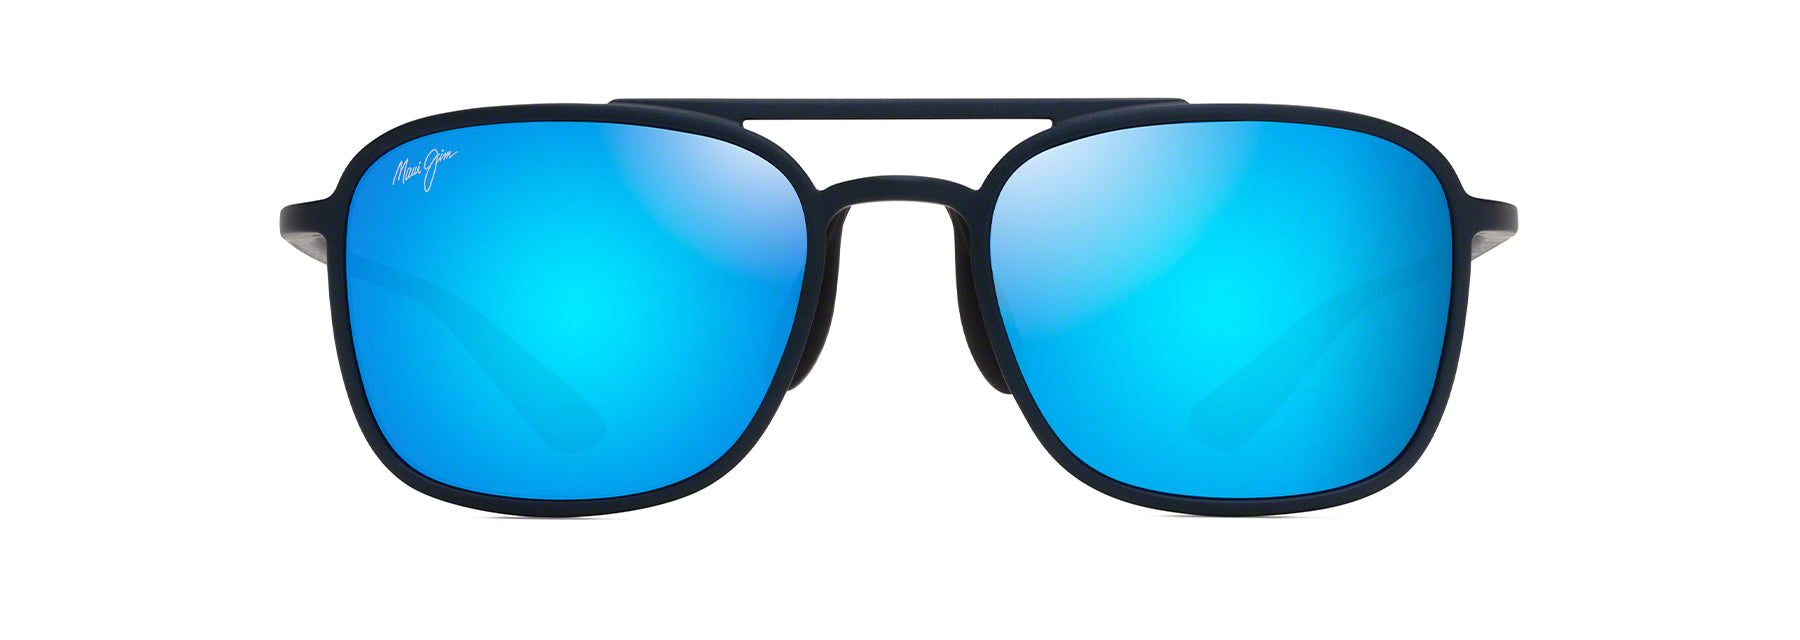 Maui Jim Keokea Sunglasses